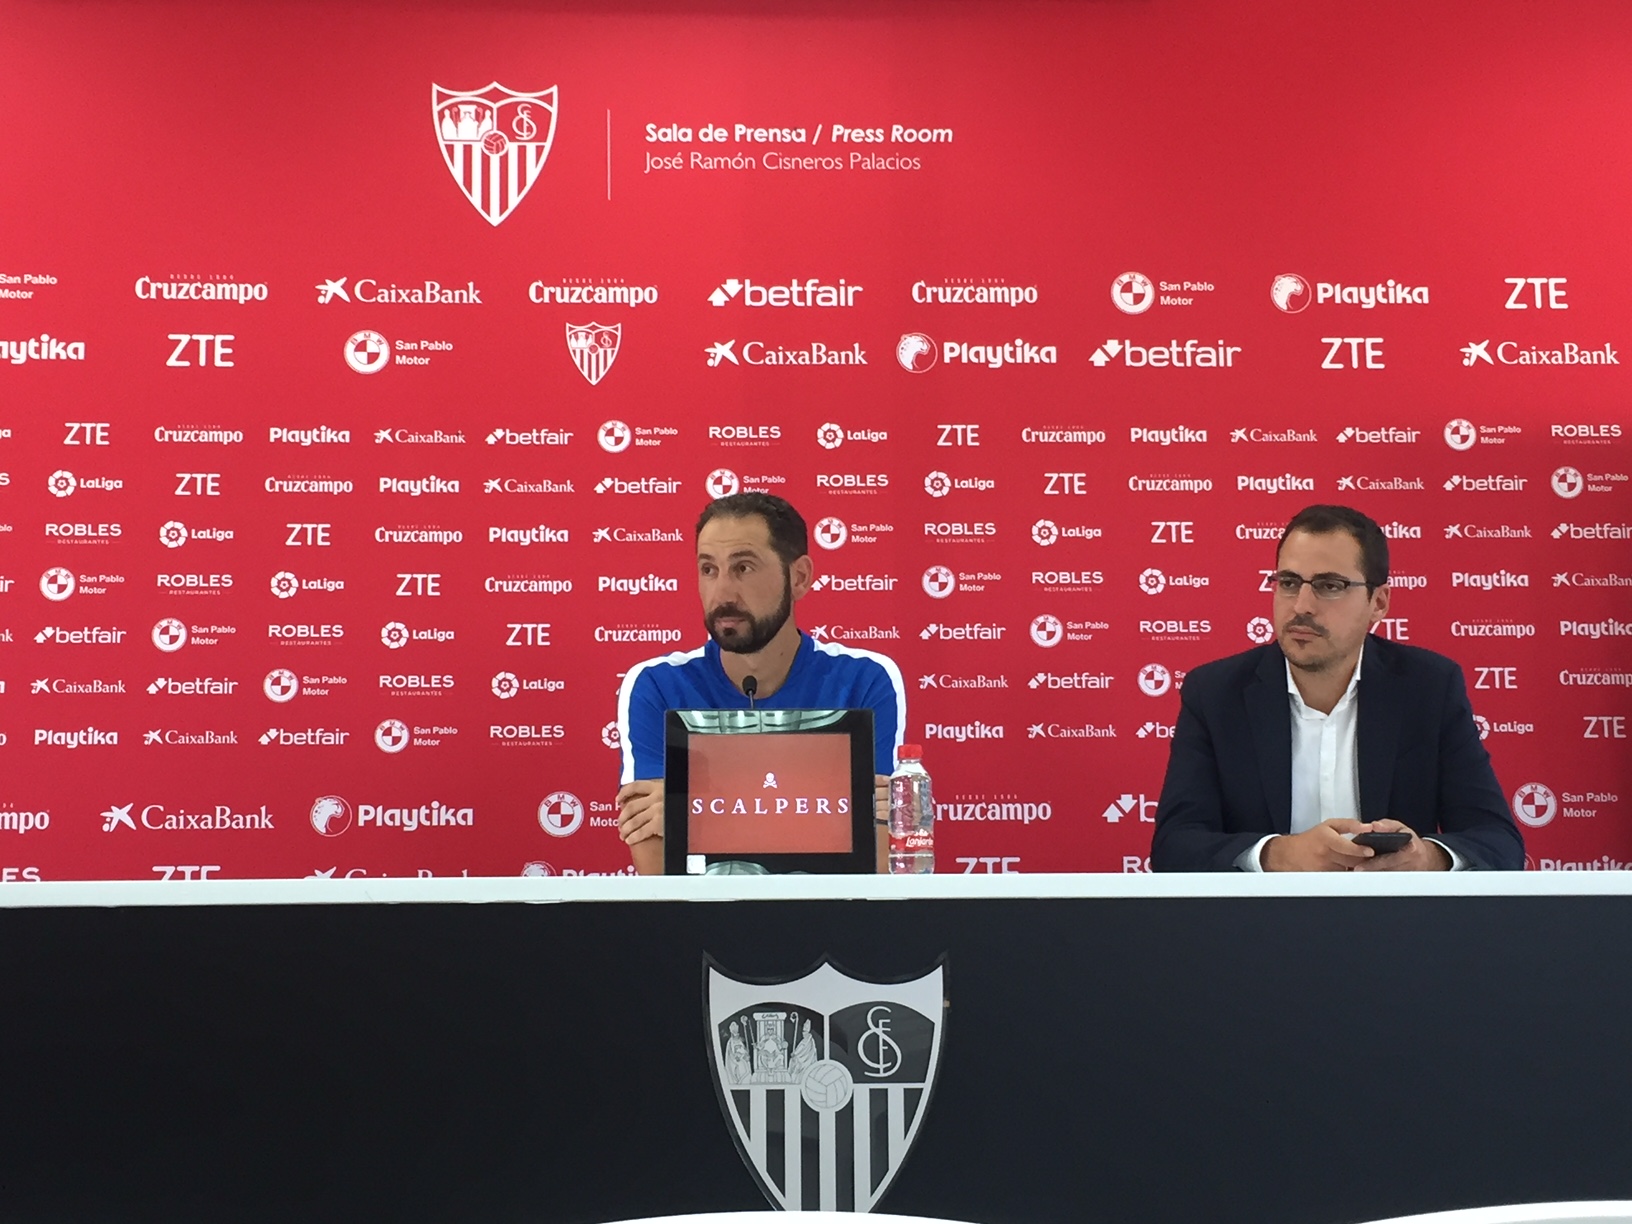 Pablo Machín talks about the 2018/19 league opener